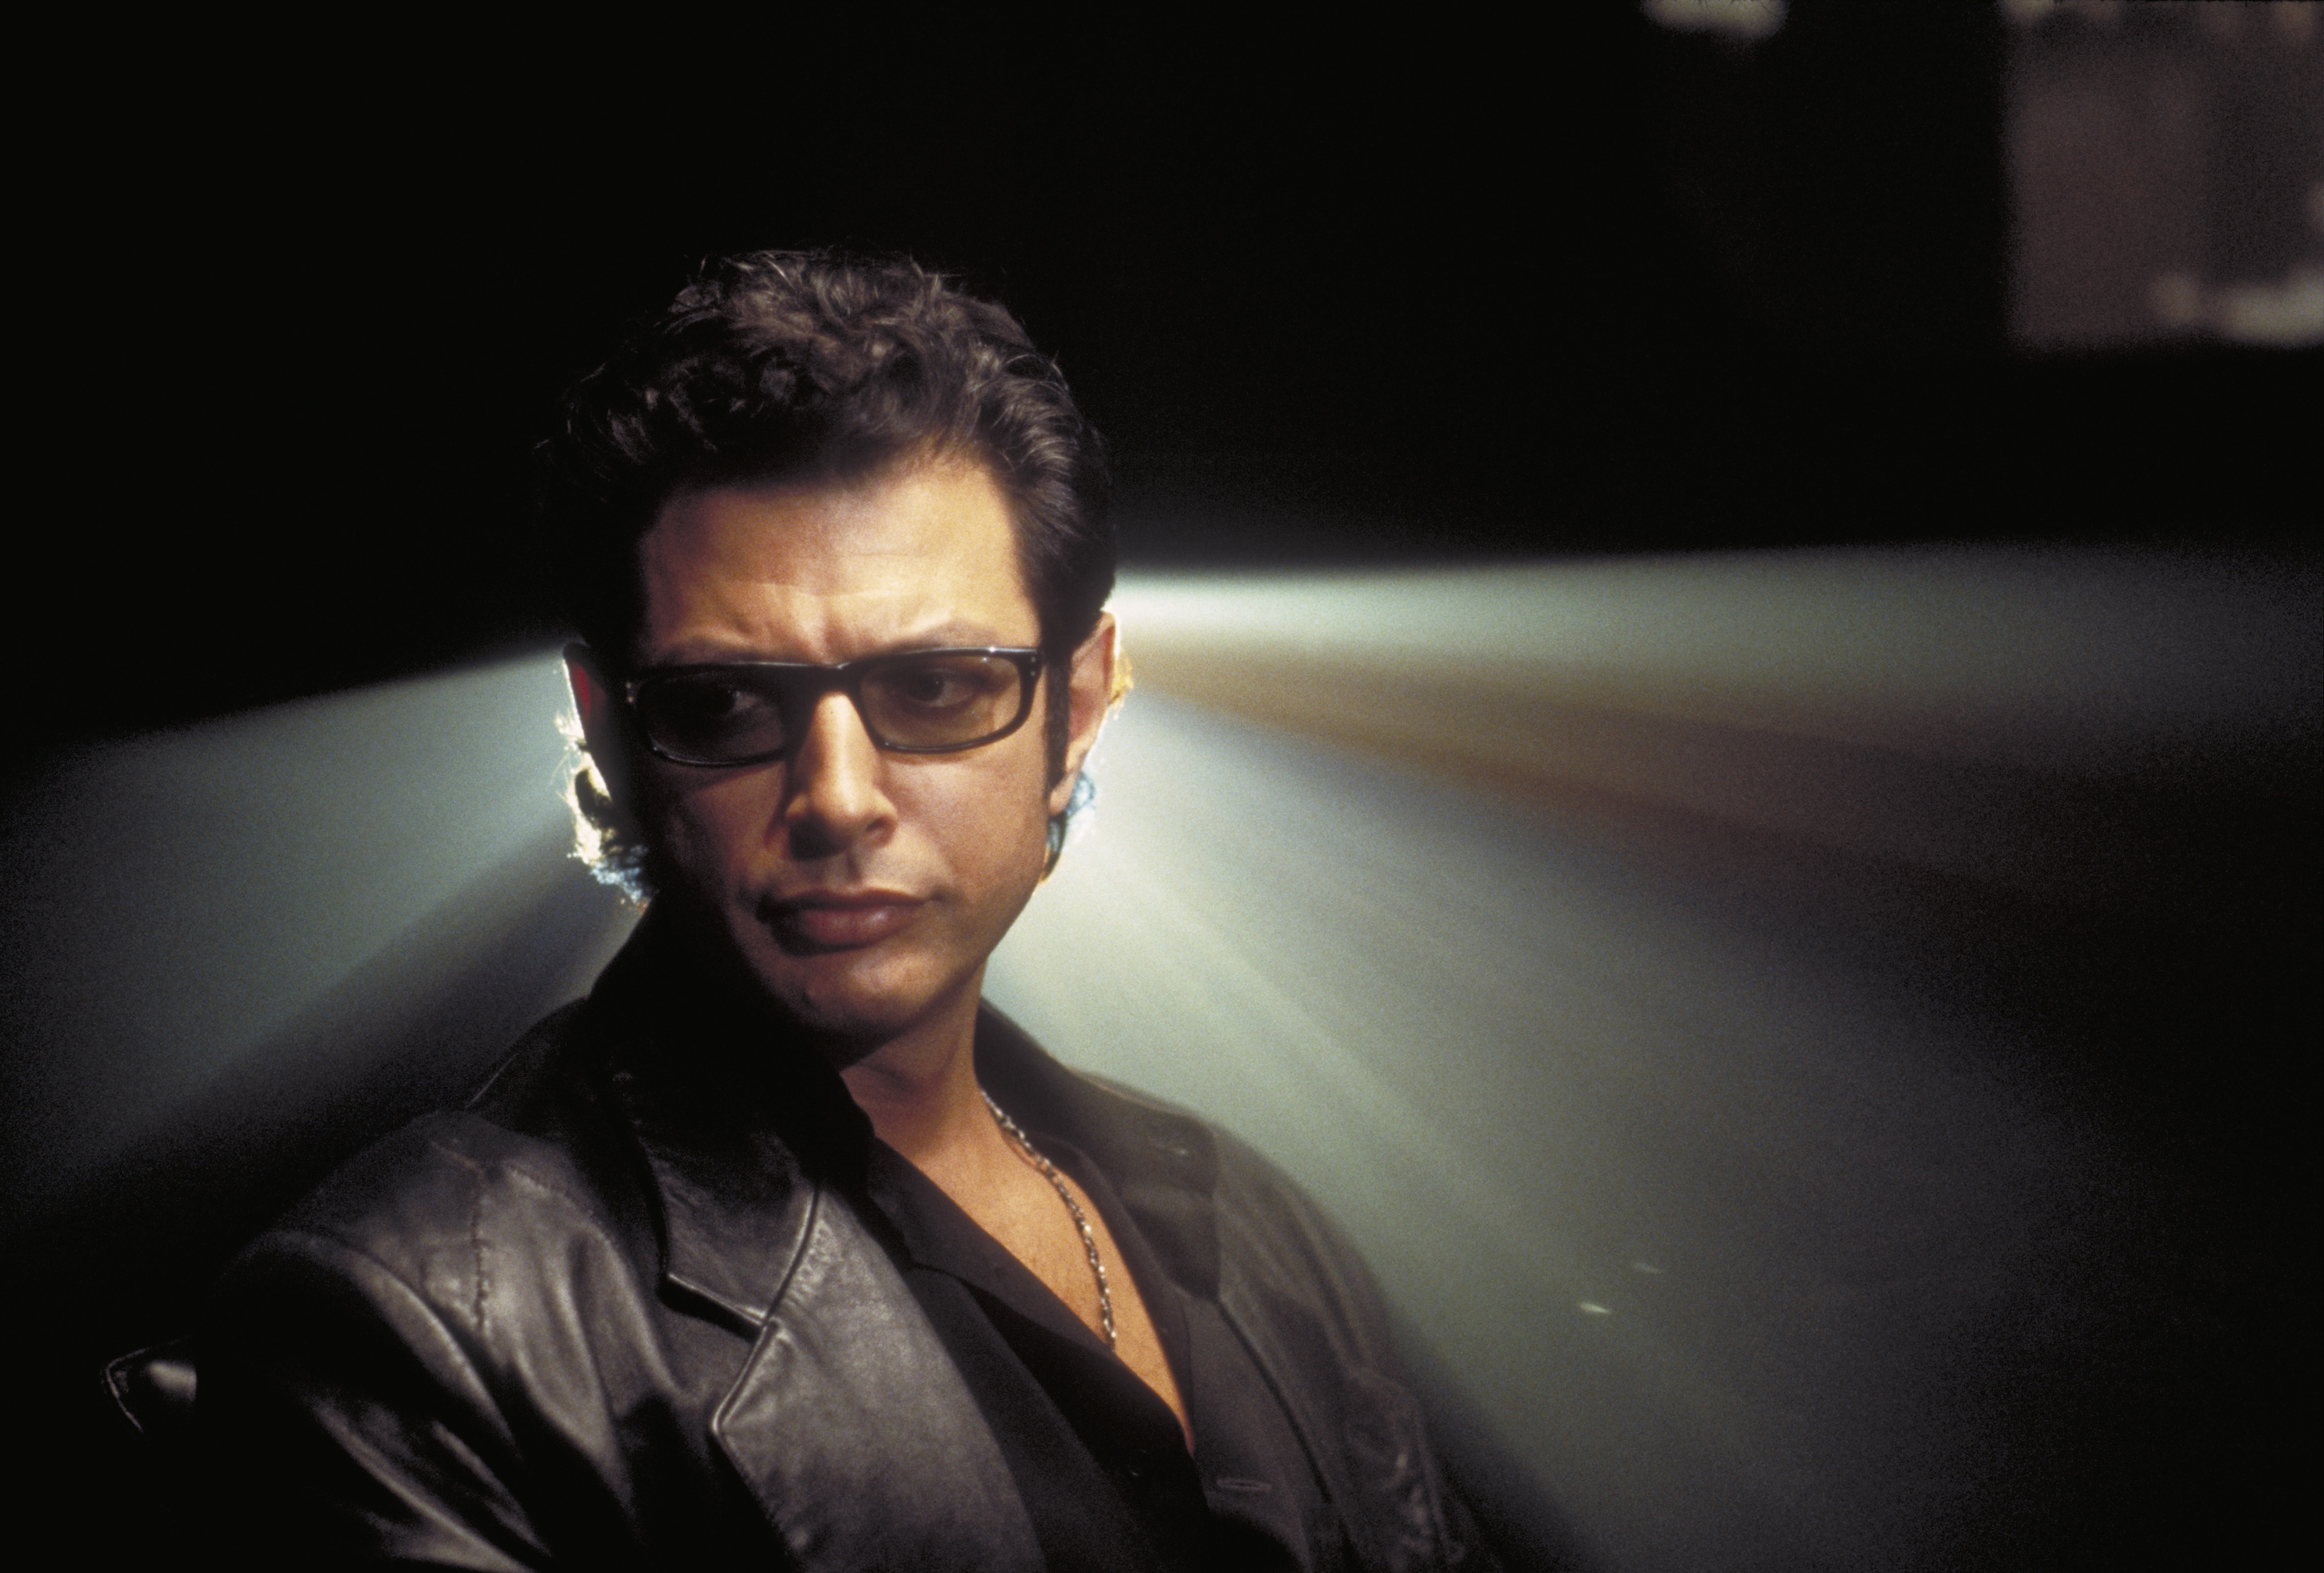 Jeff Goldblum plays Dr. Ian Malcolm in the original cast of Jurassic Park